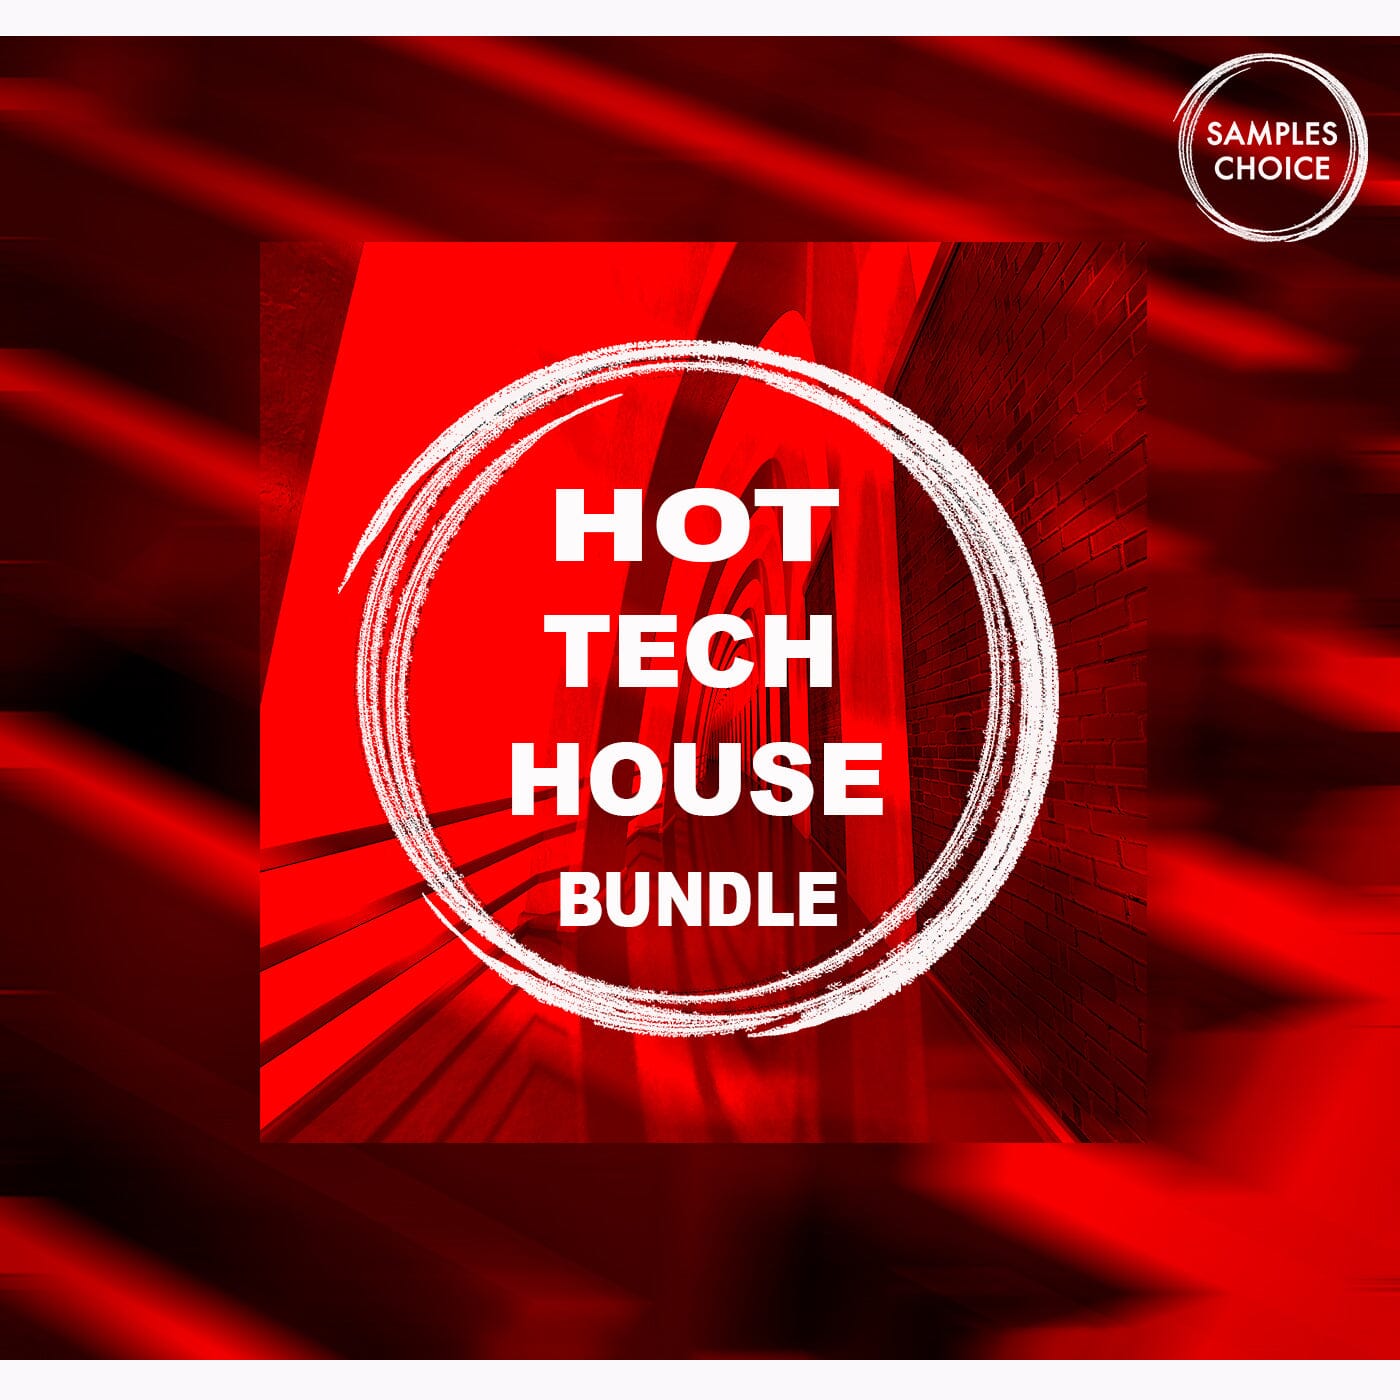 Hot Tech House </br> Bundle Sample Pack Samples Choice